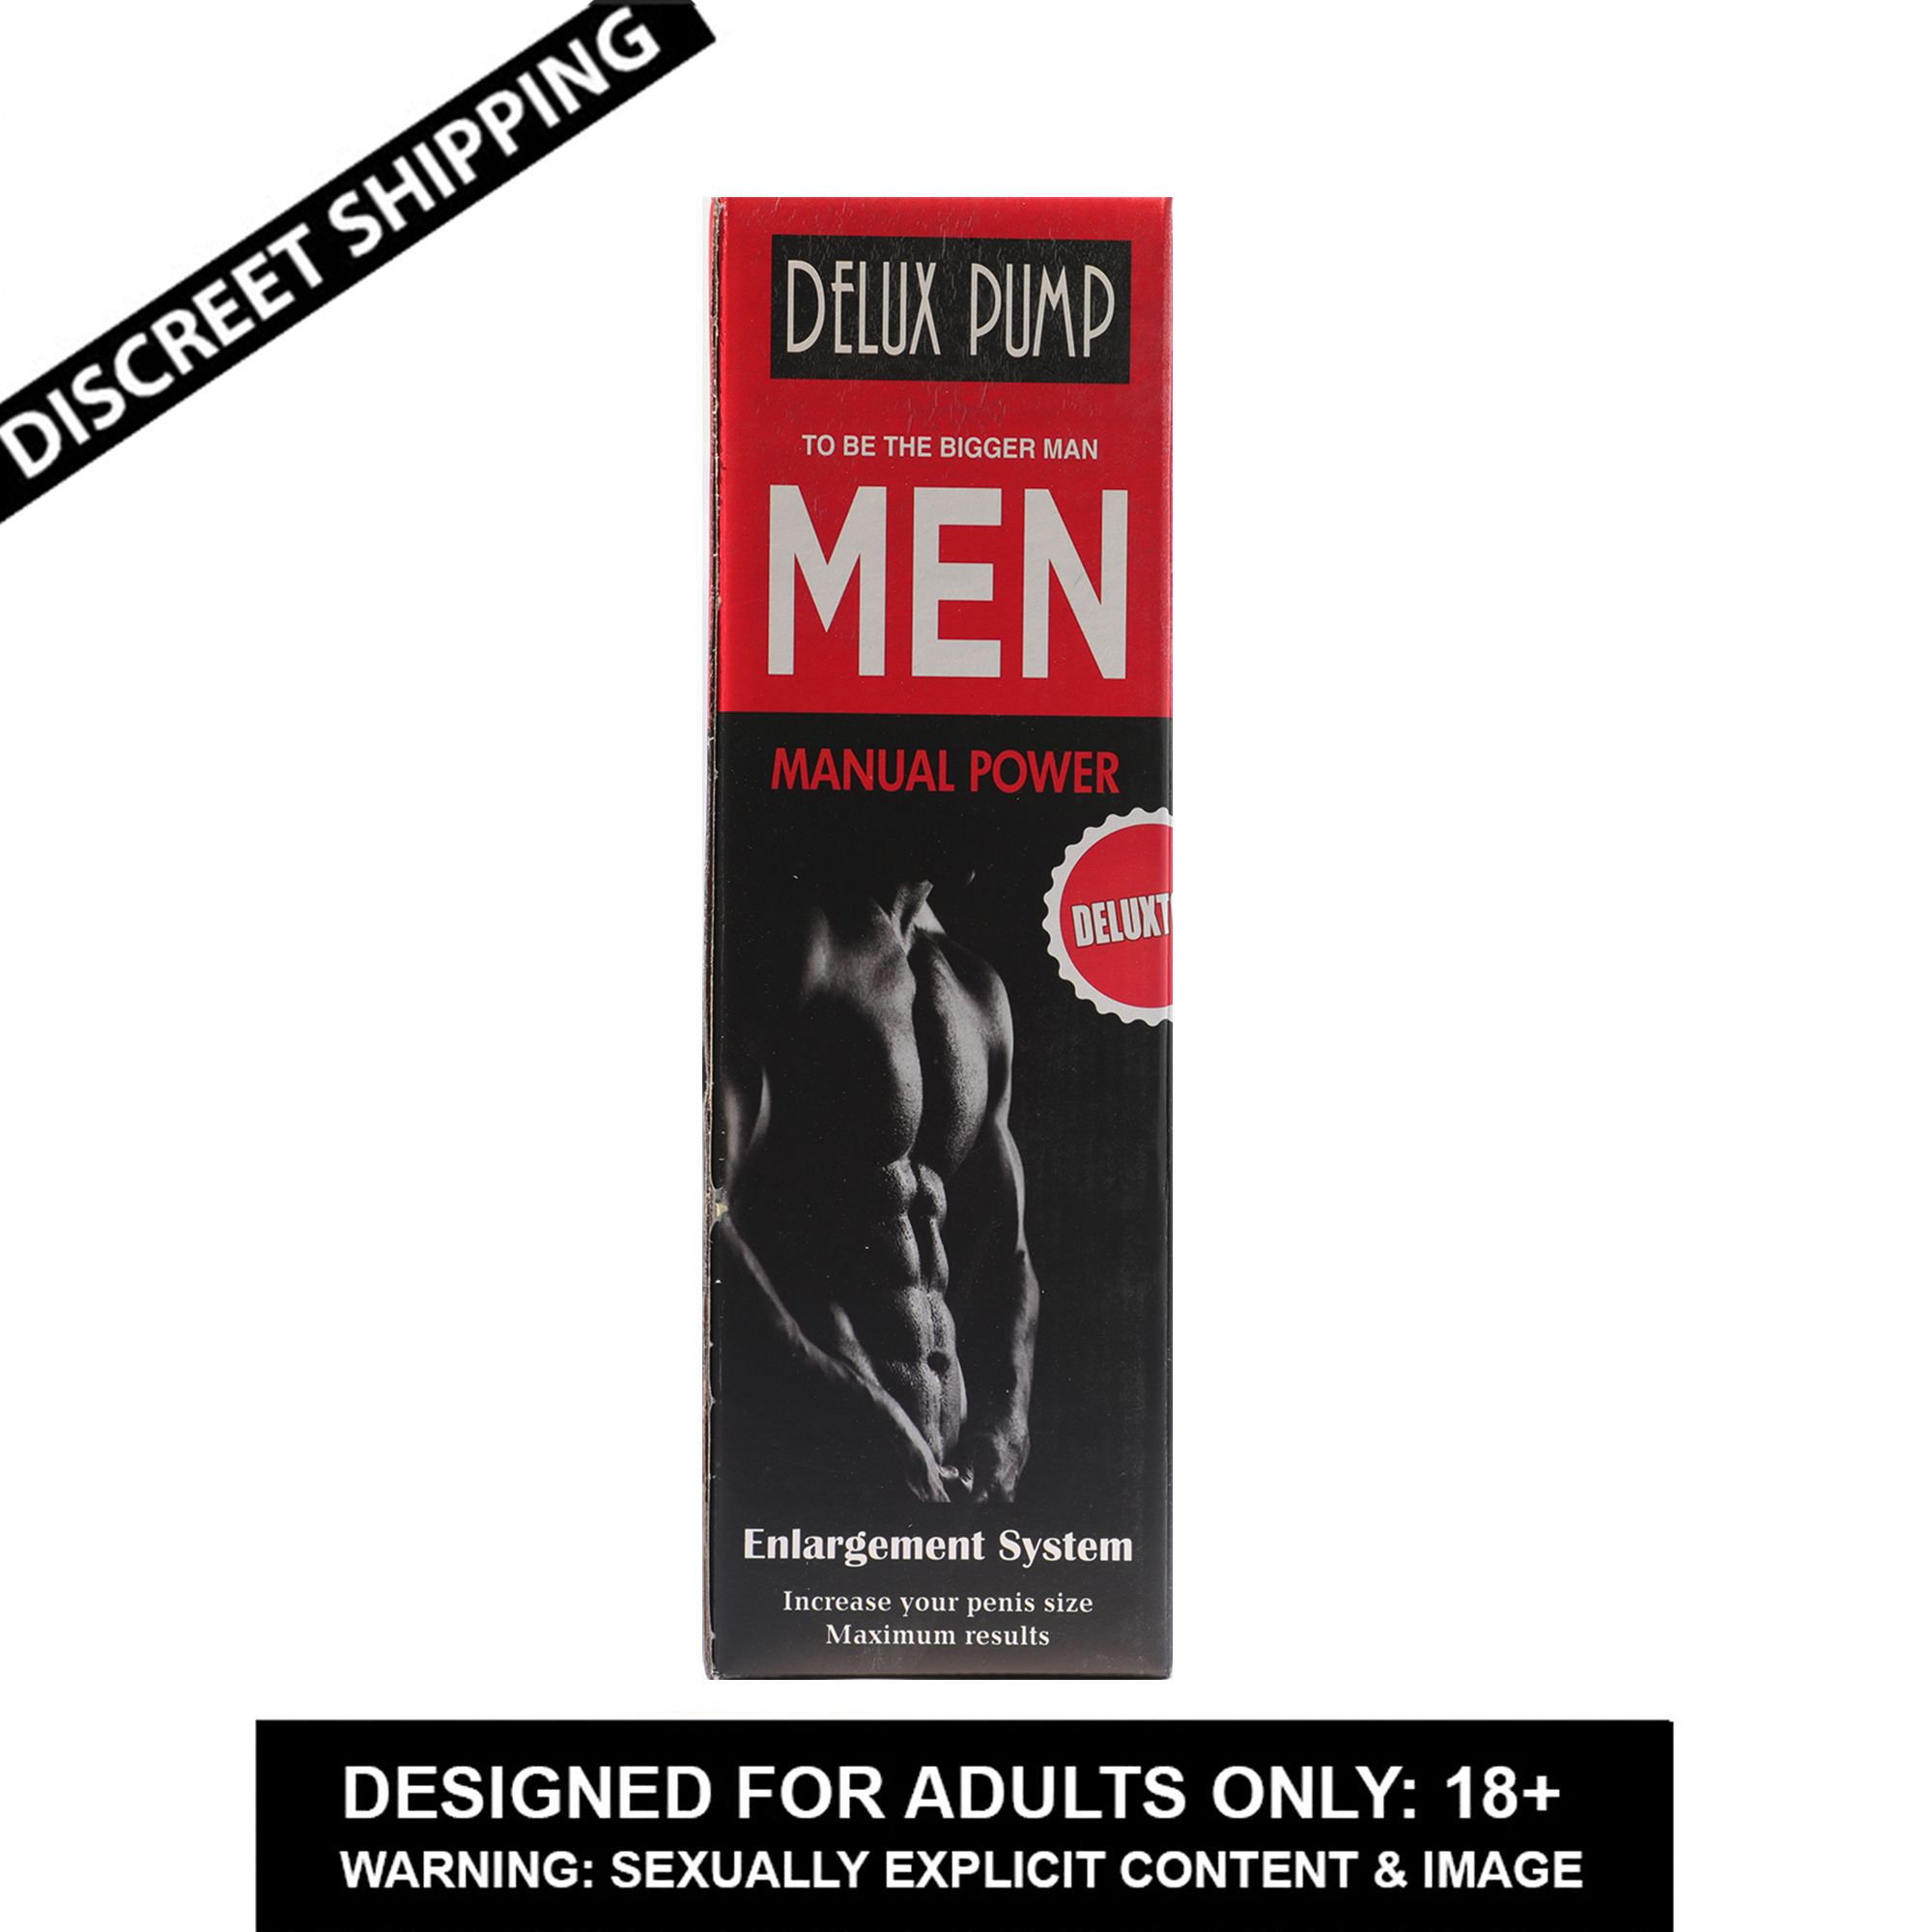 Penis Vacuum Manual power Pump Male Enhancement Enlarger Pump for Men - IMPORTED